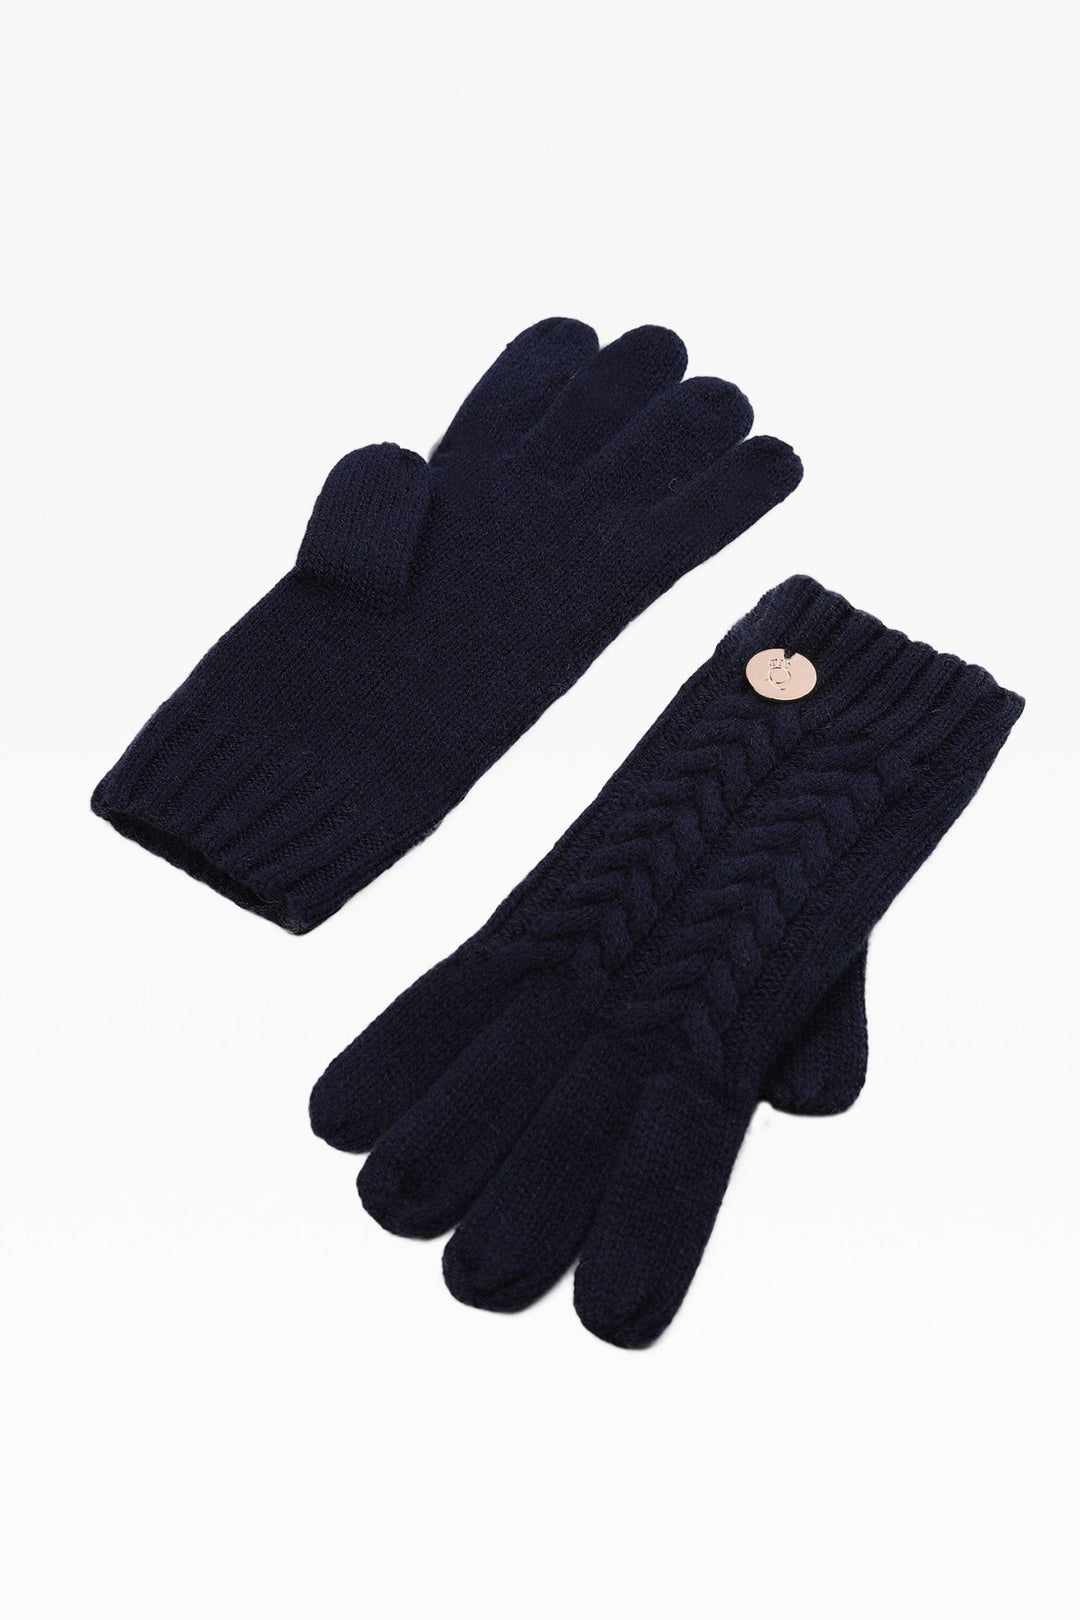 Georgie Cable Rib Gloves - Dunedin Cashmere